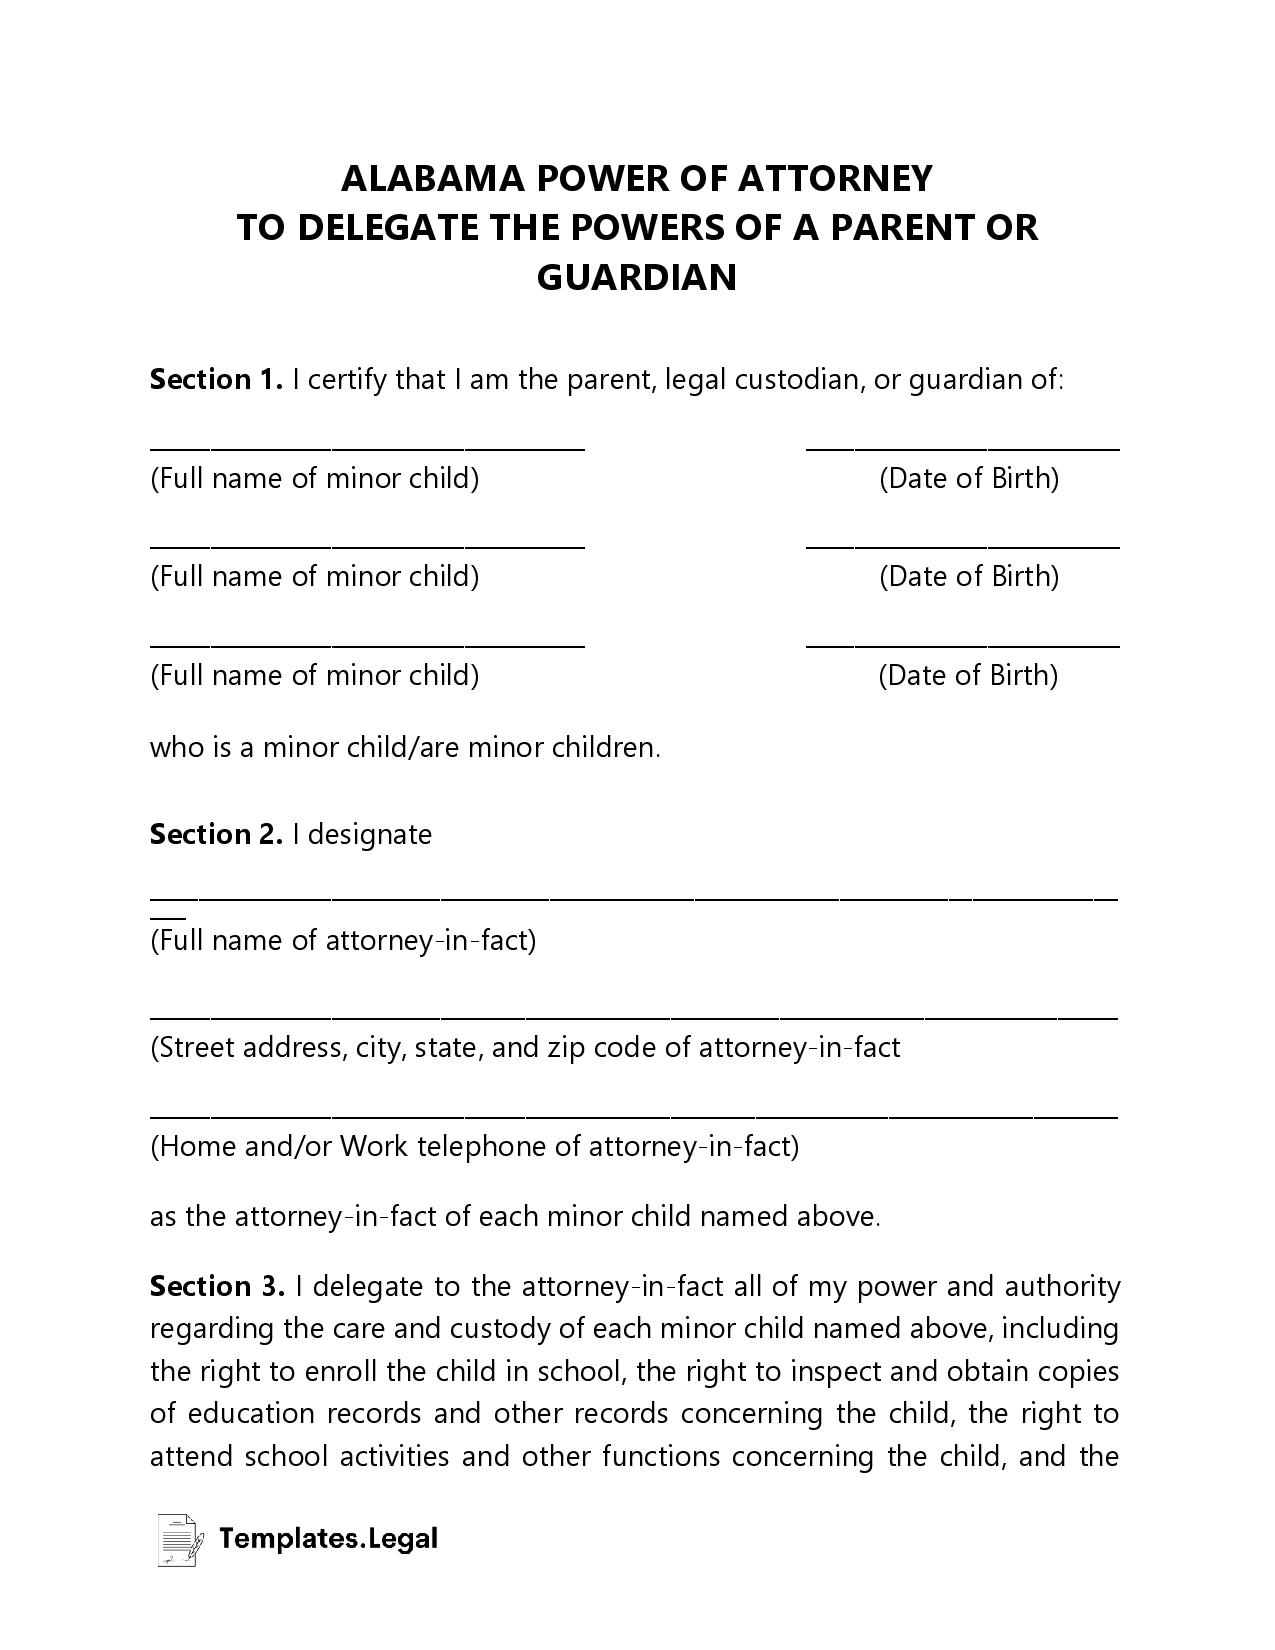 Alabama Minor (Child) Power of Attorney - Templates.Legal